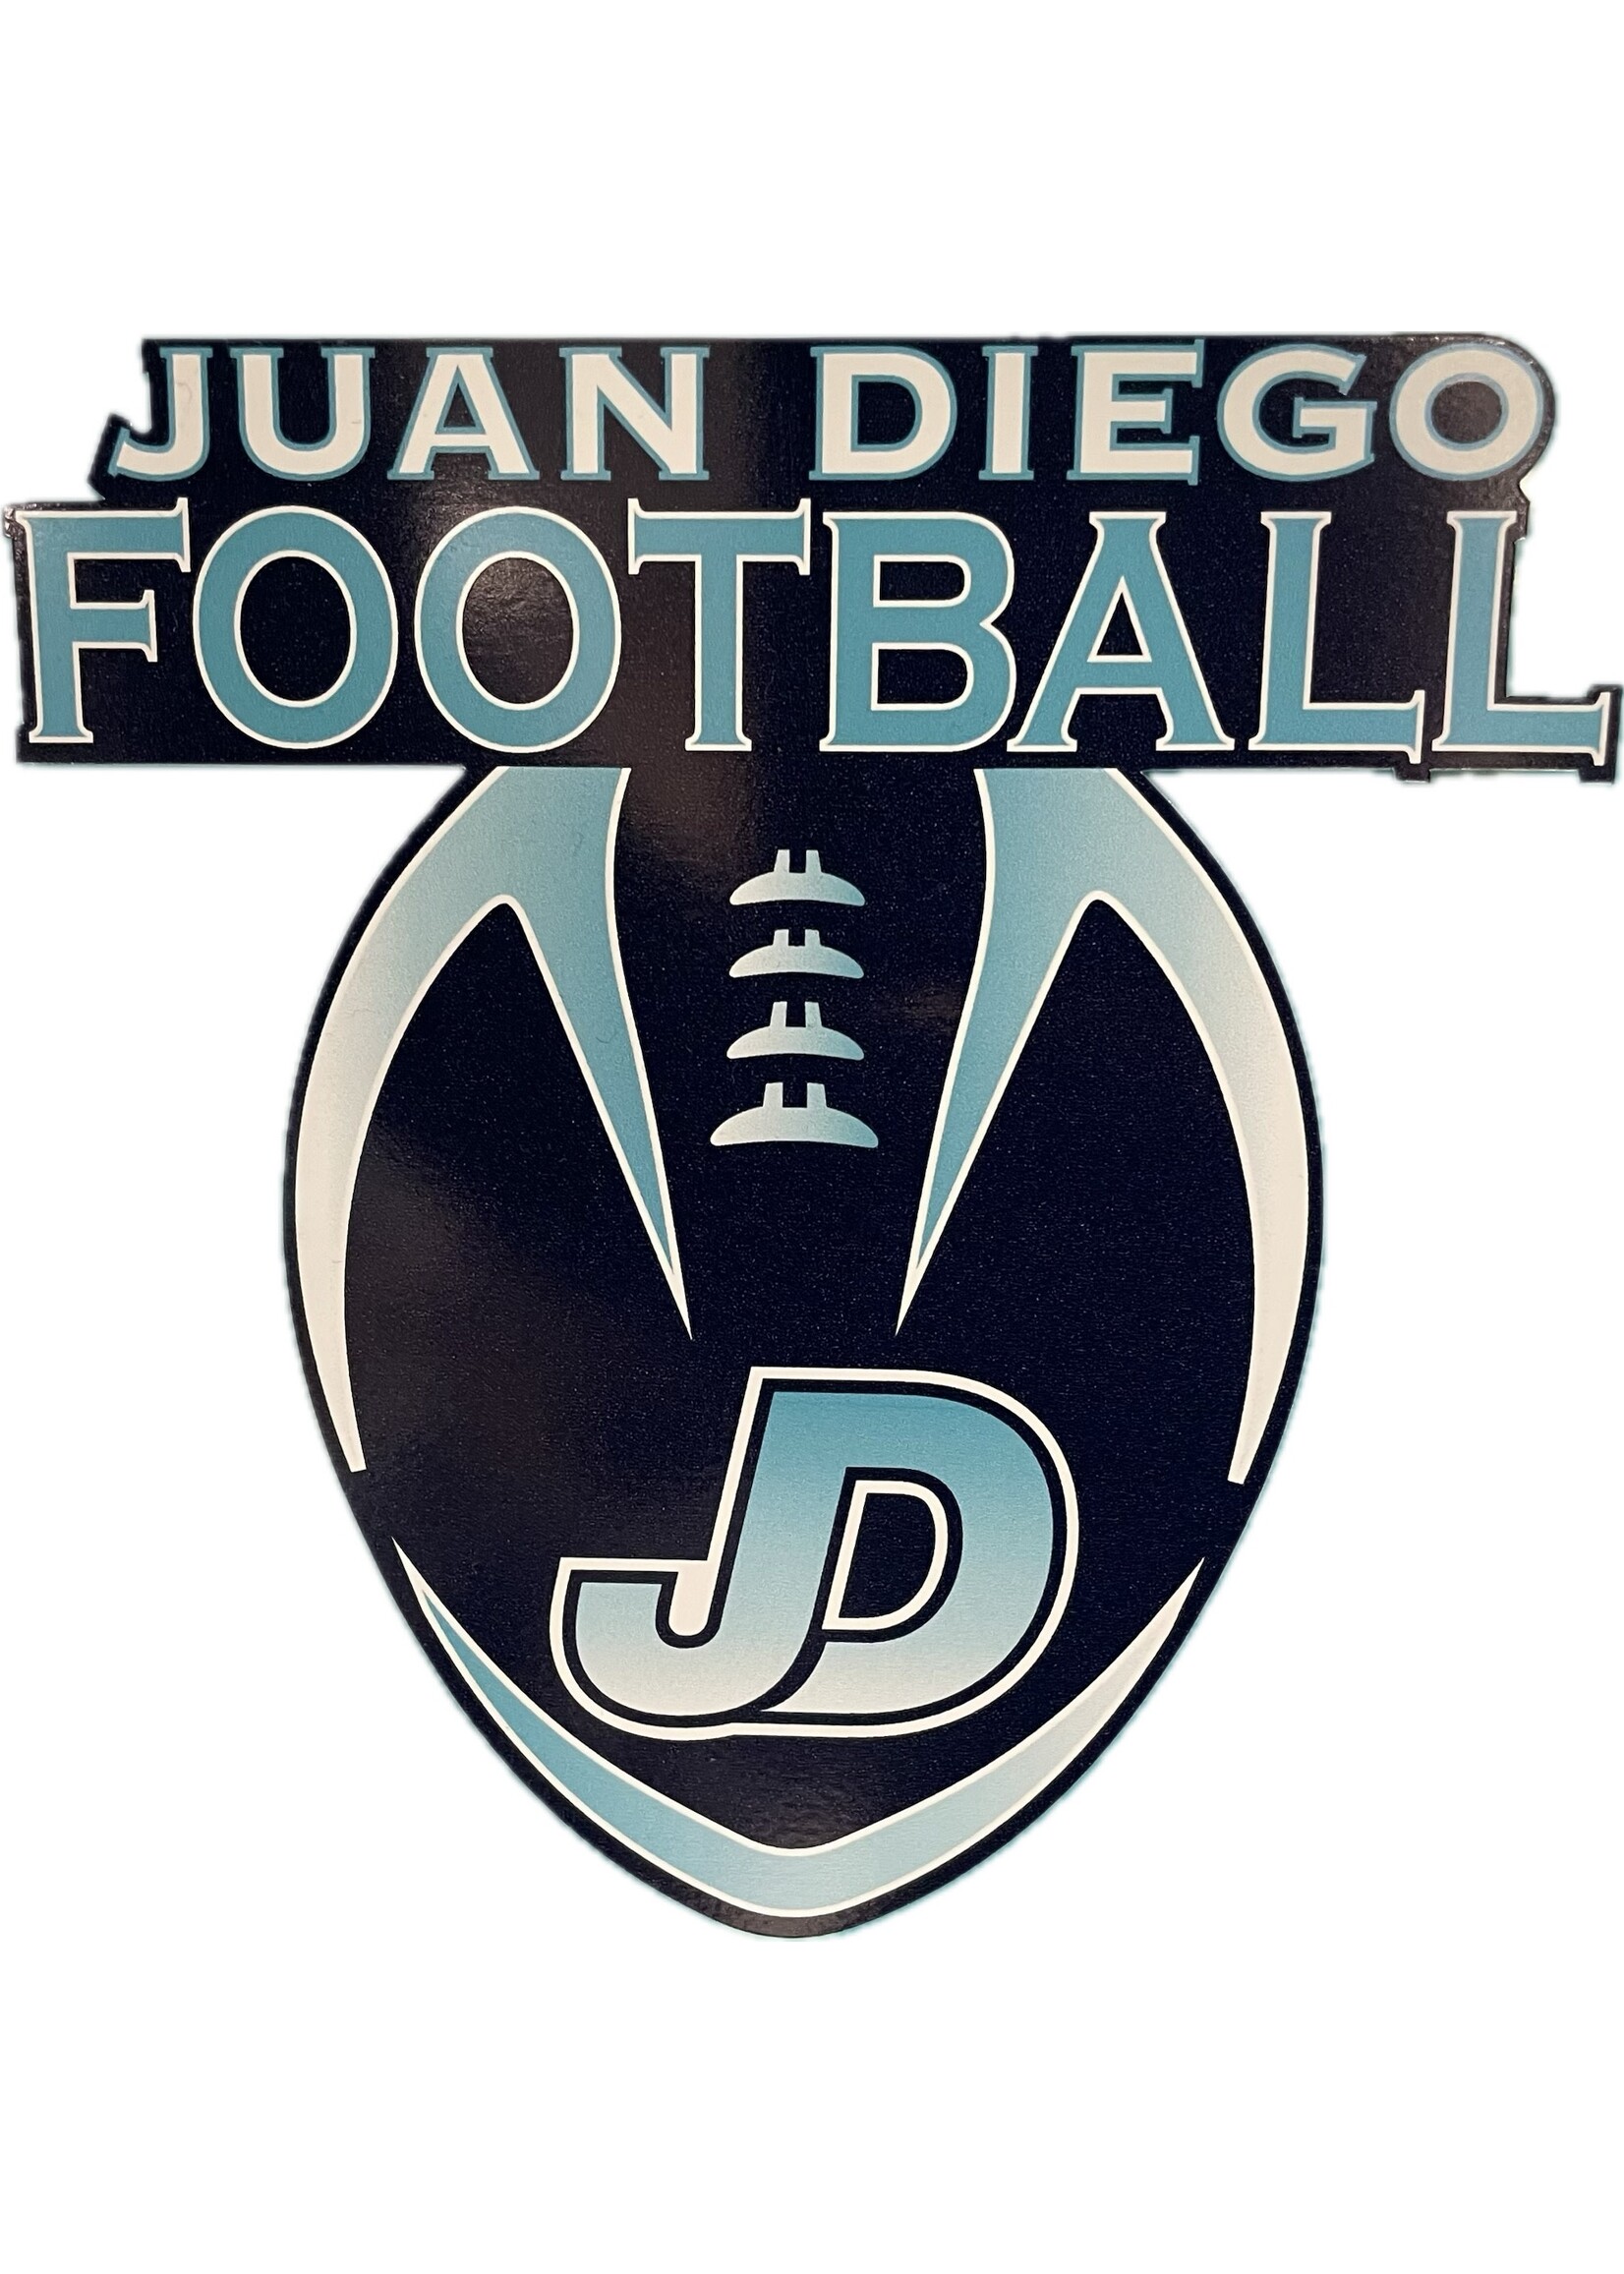 NON-UNIFORM Football - Decal, Juan Diego Football